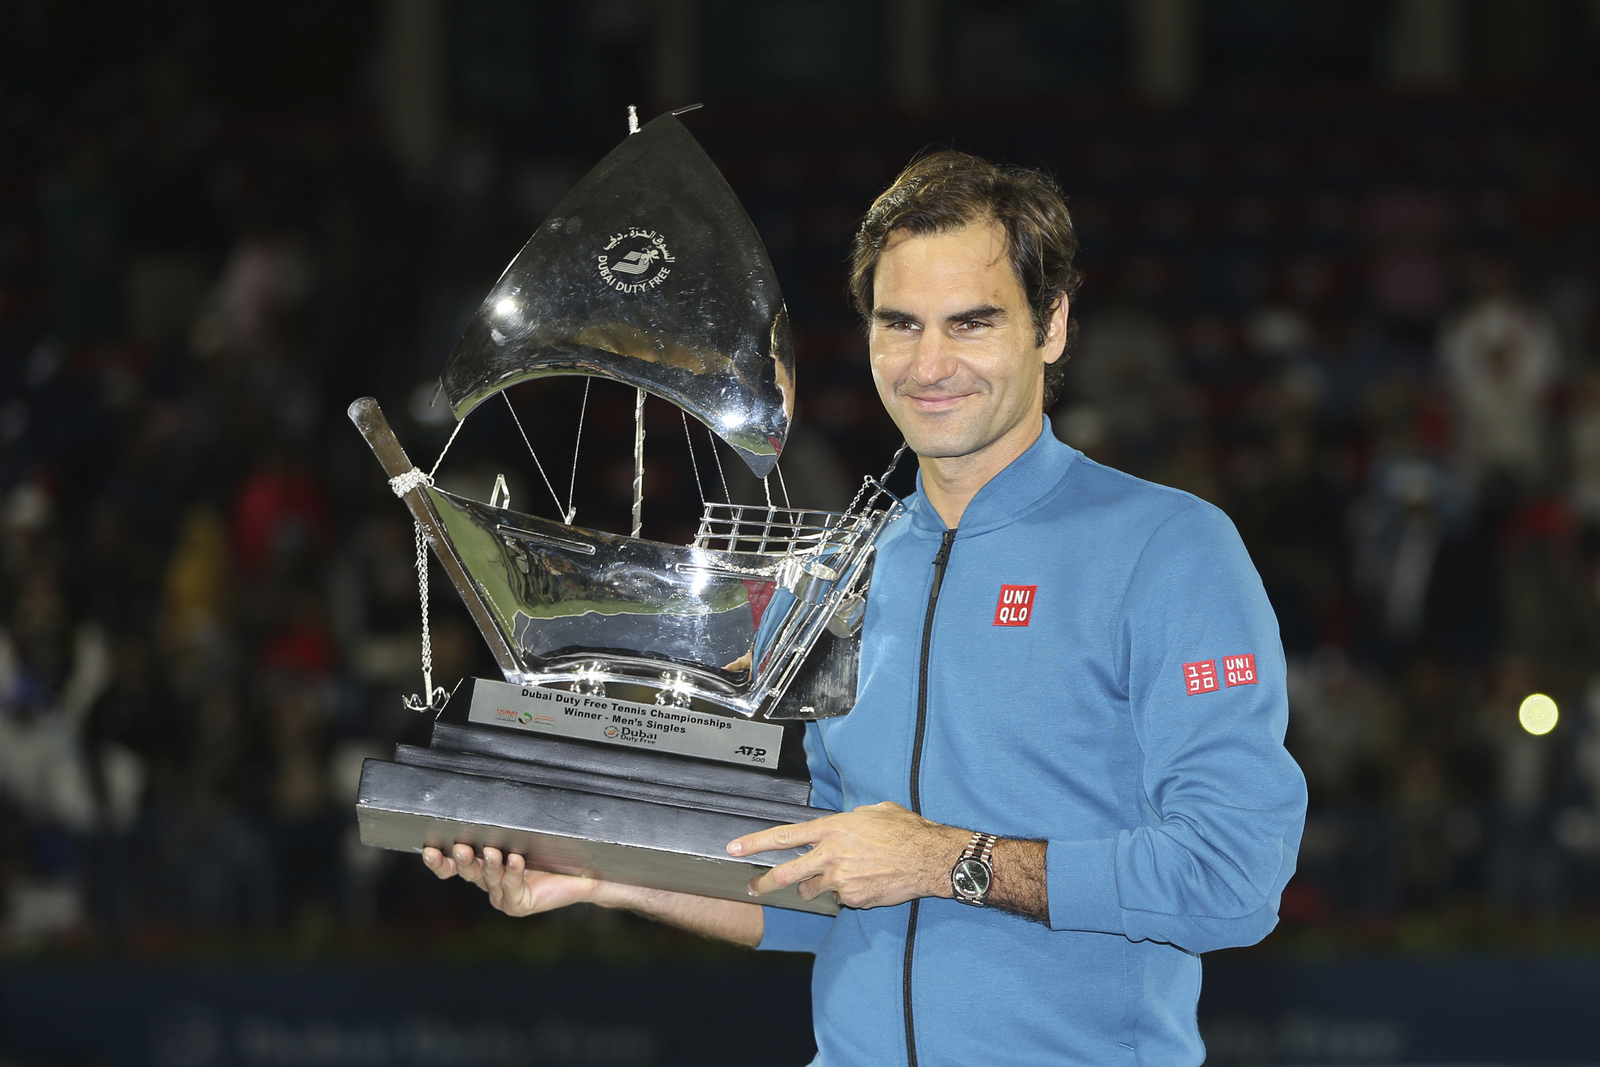 Roger Federer derrotó 6-4, 6-4 a Stefanos Tsitsipas en la gran final del torneo de Dubái para llegar a cien títulos en su carrera.